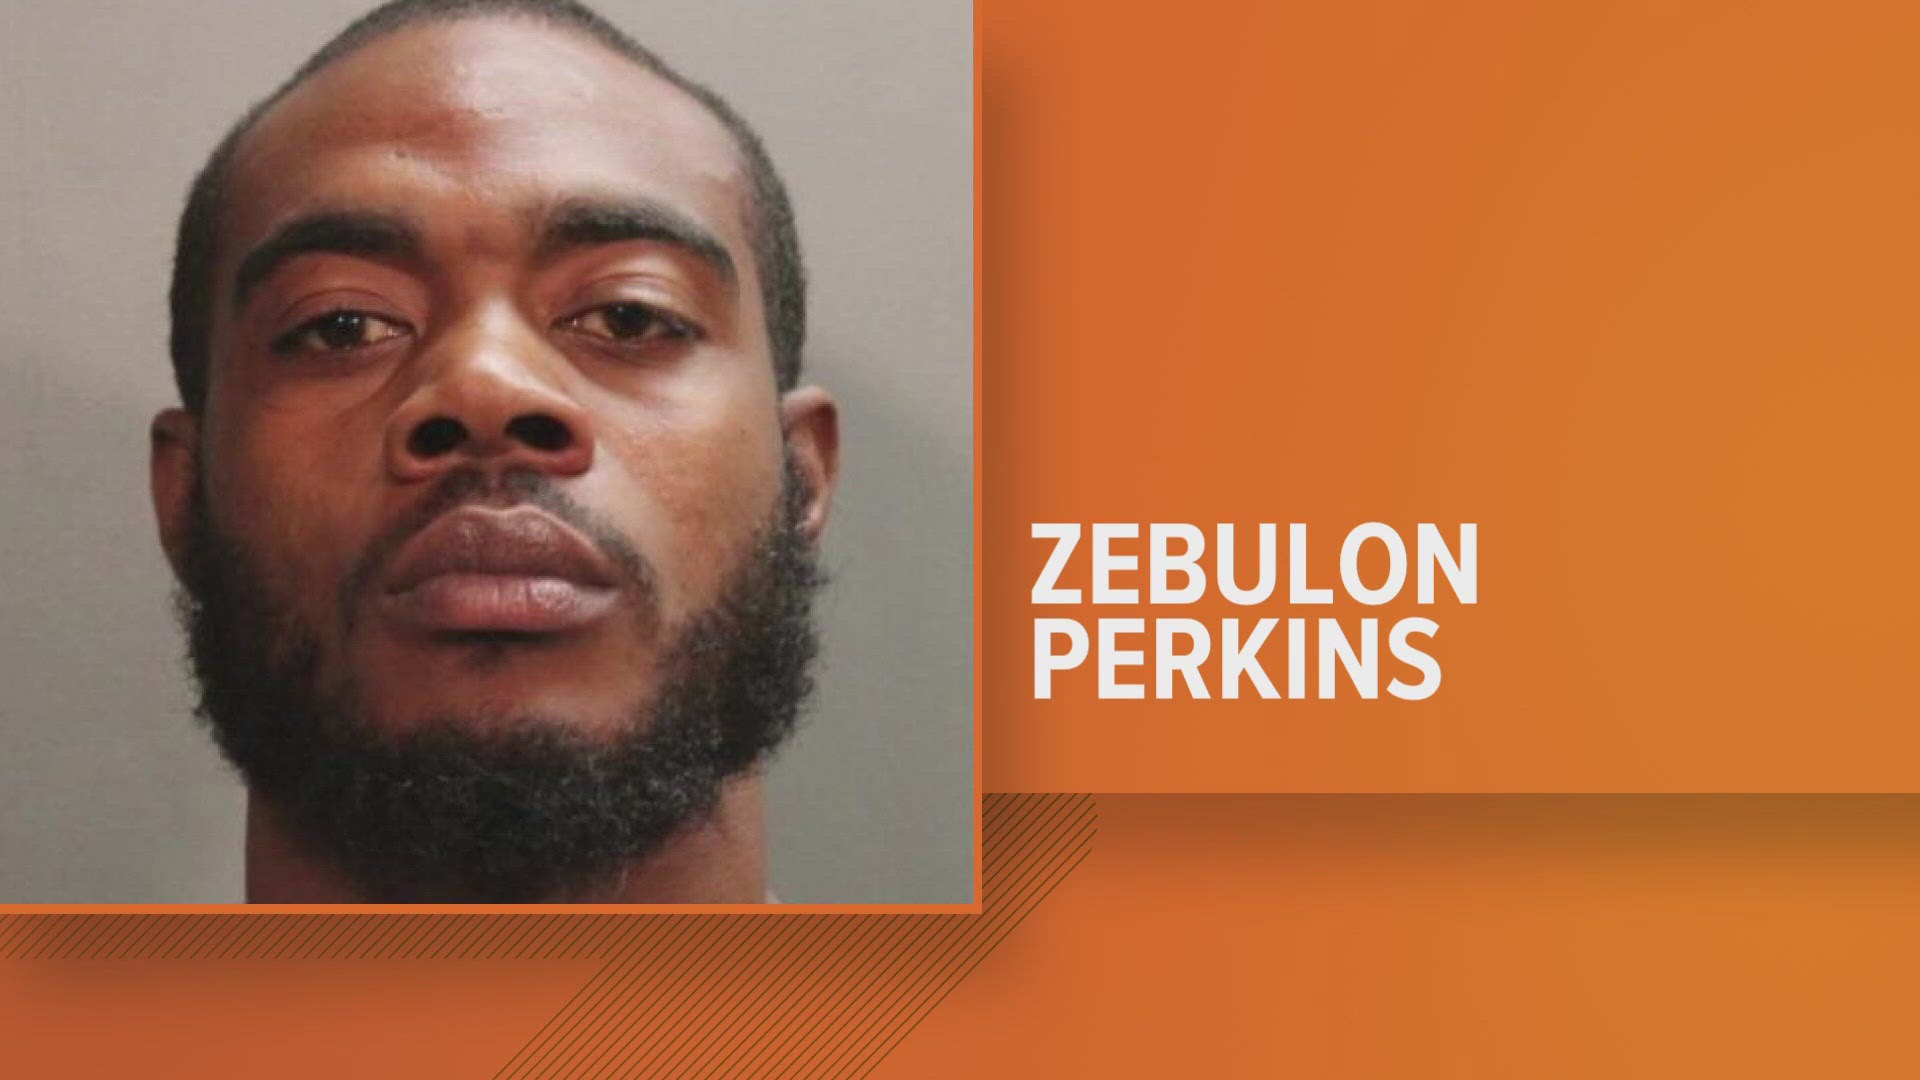 Zebulon Perkins pleaded guilty to 2019 Christmas murders of Leah Kline and Vivian James between Dec. 25-26.